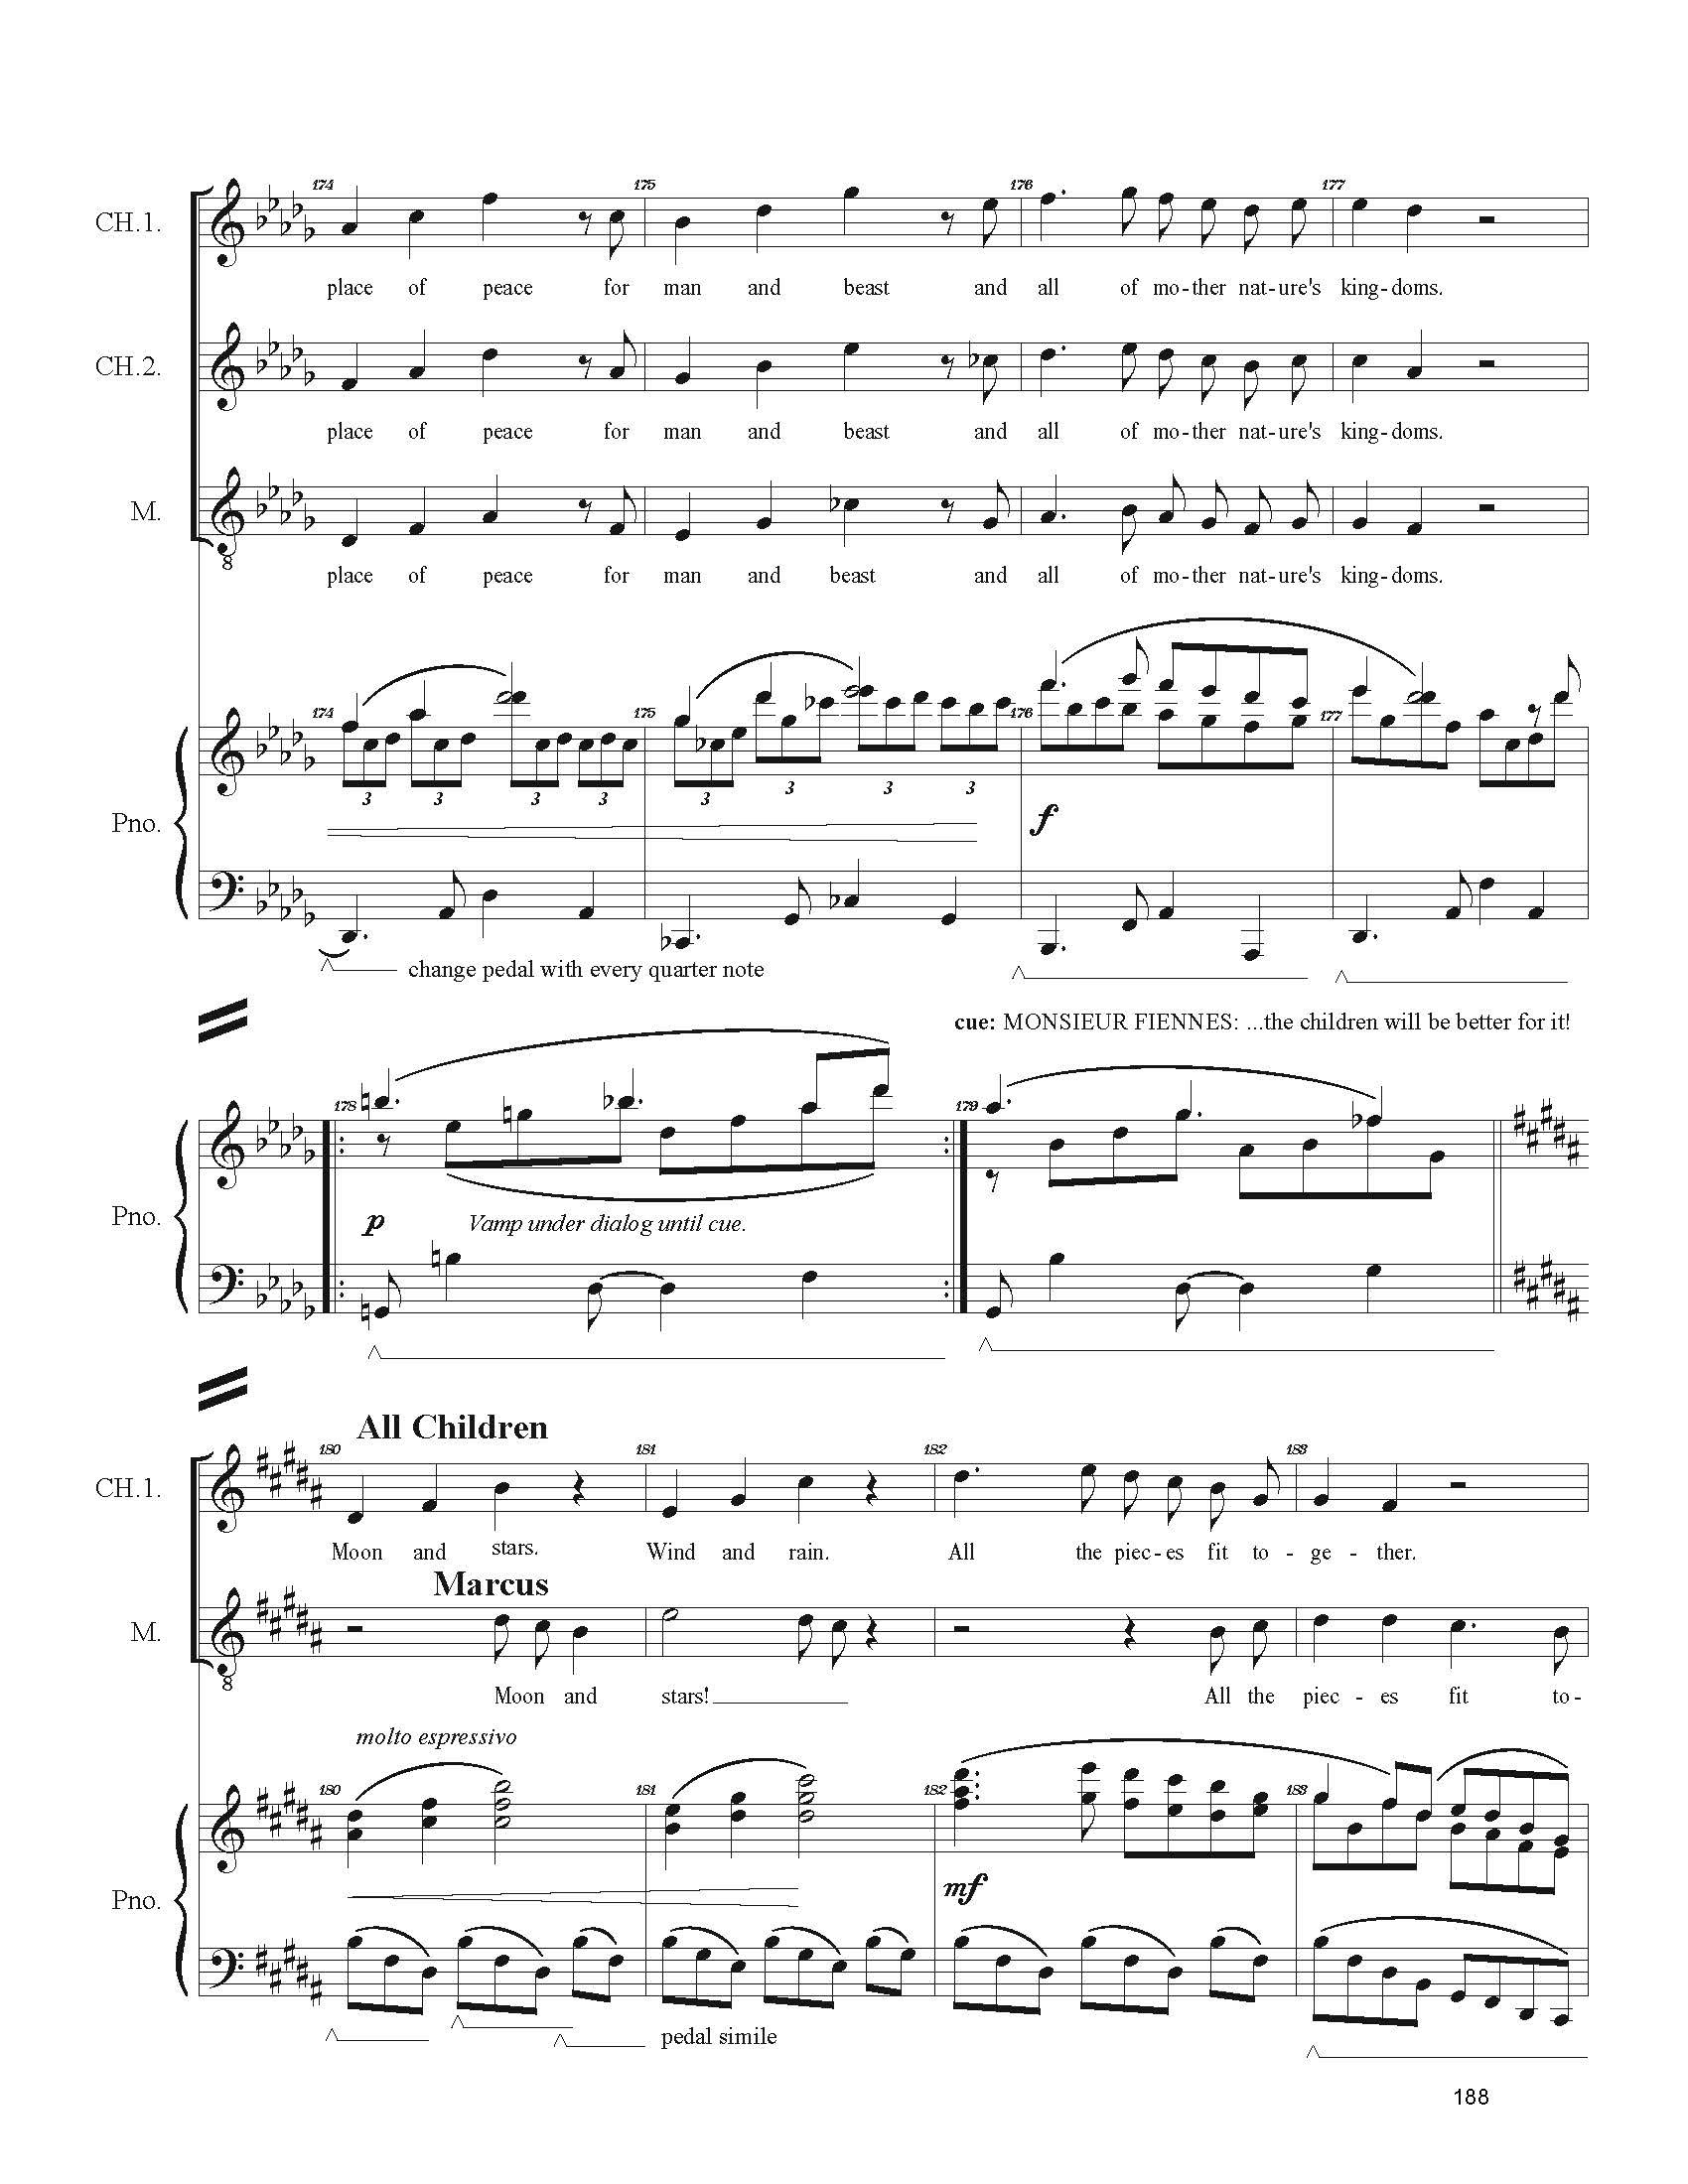 FULL PIANO VOCAL SCORE DRAFT 1 - Score_Page_188.jpg